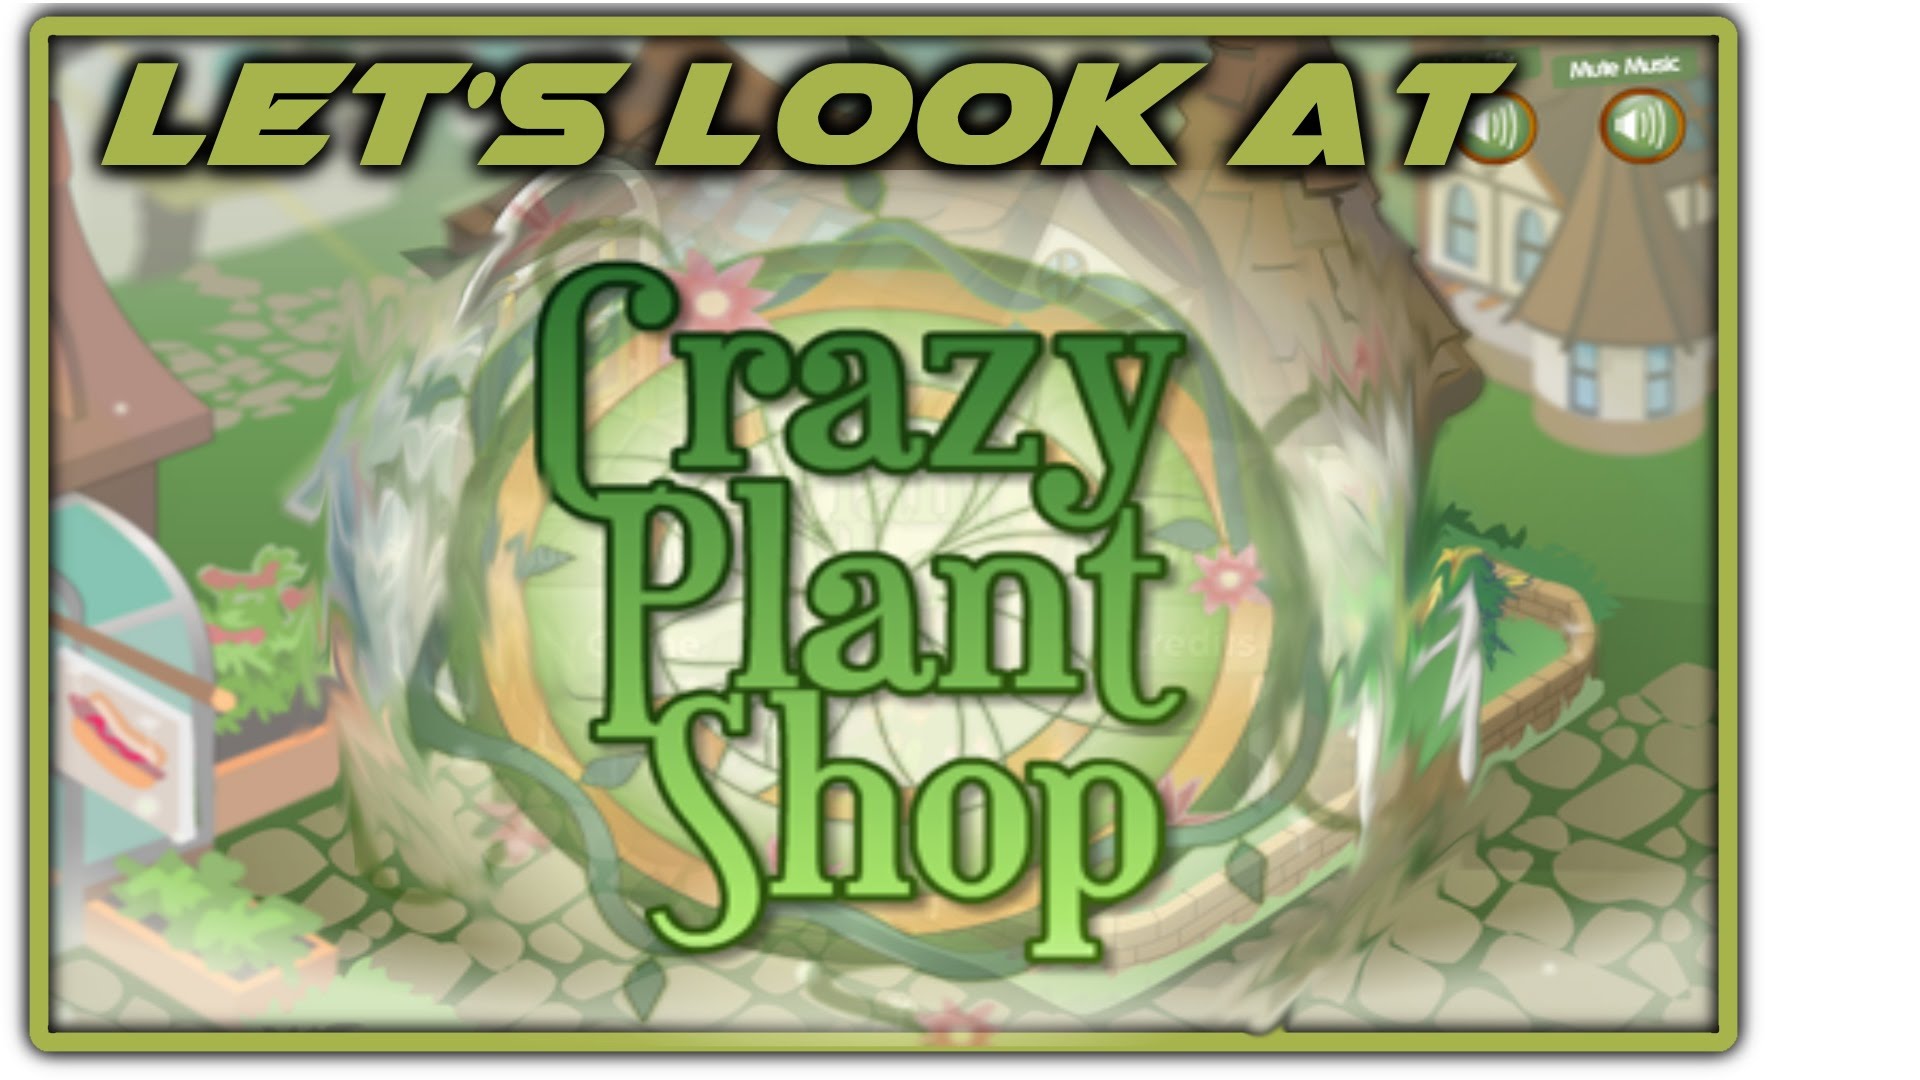 Crazy Plant Shop HD wallpapers, Desktop wallpaper - most viewed